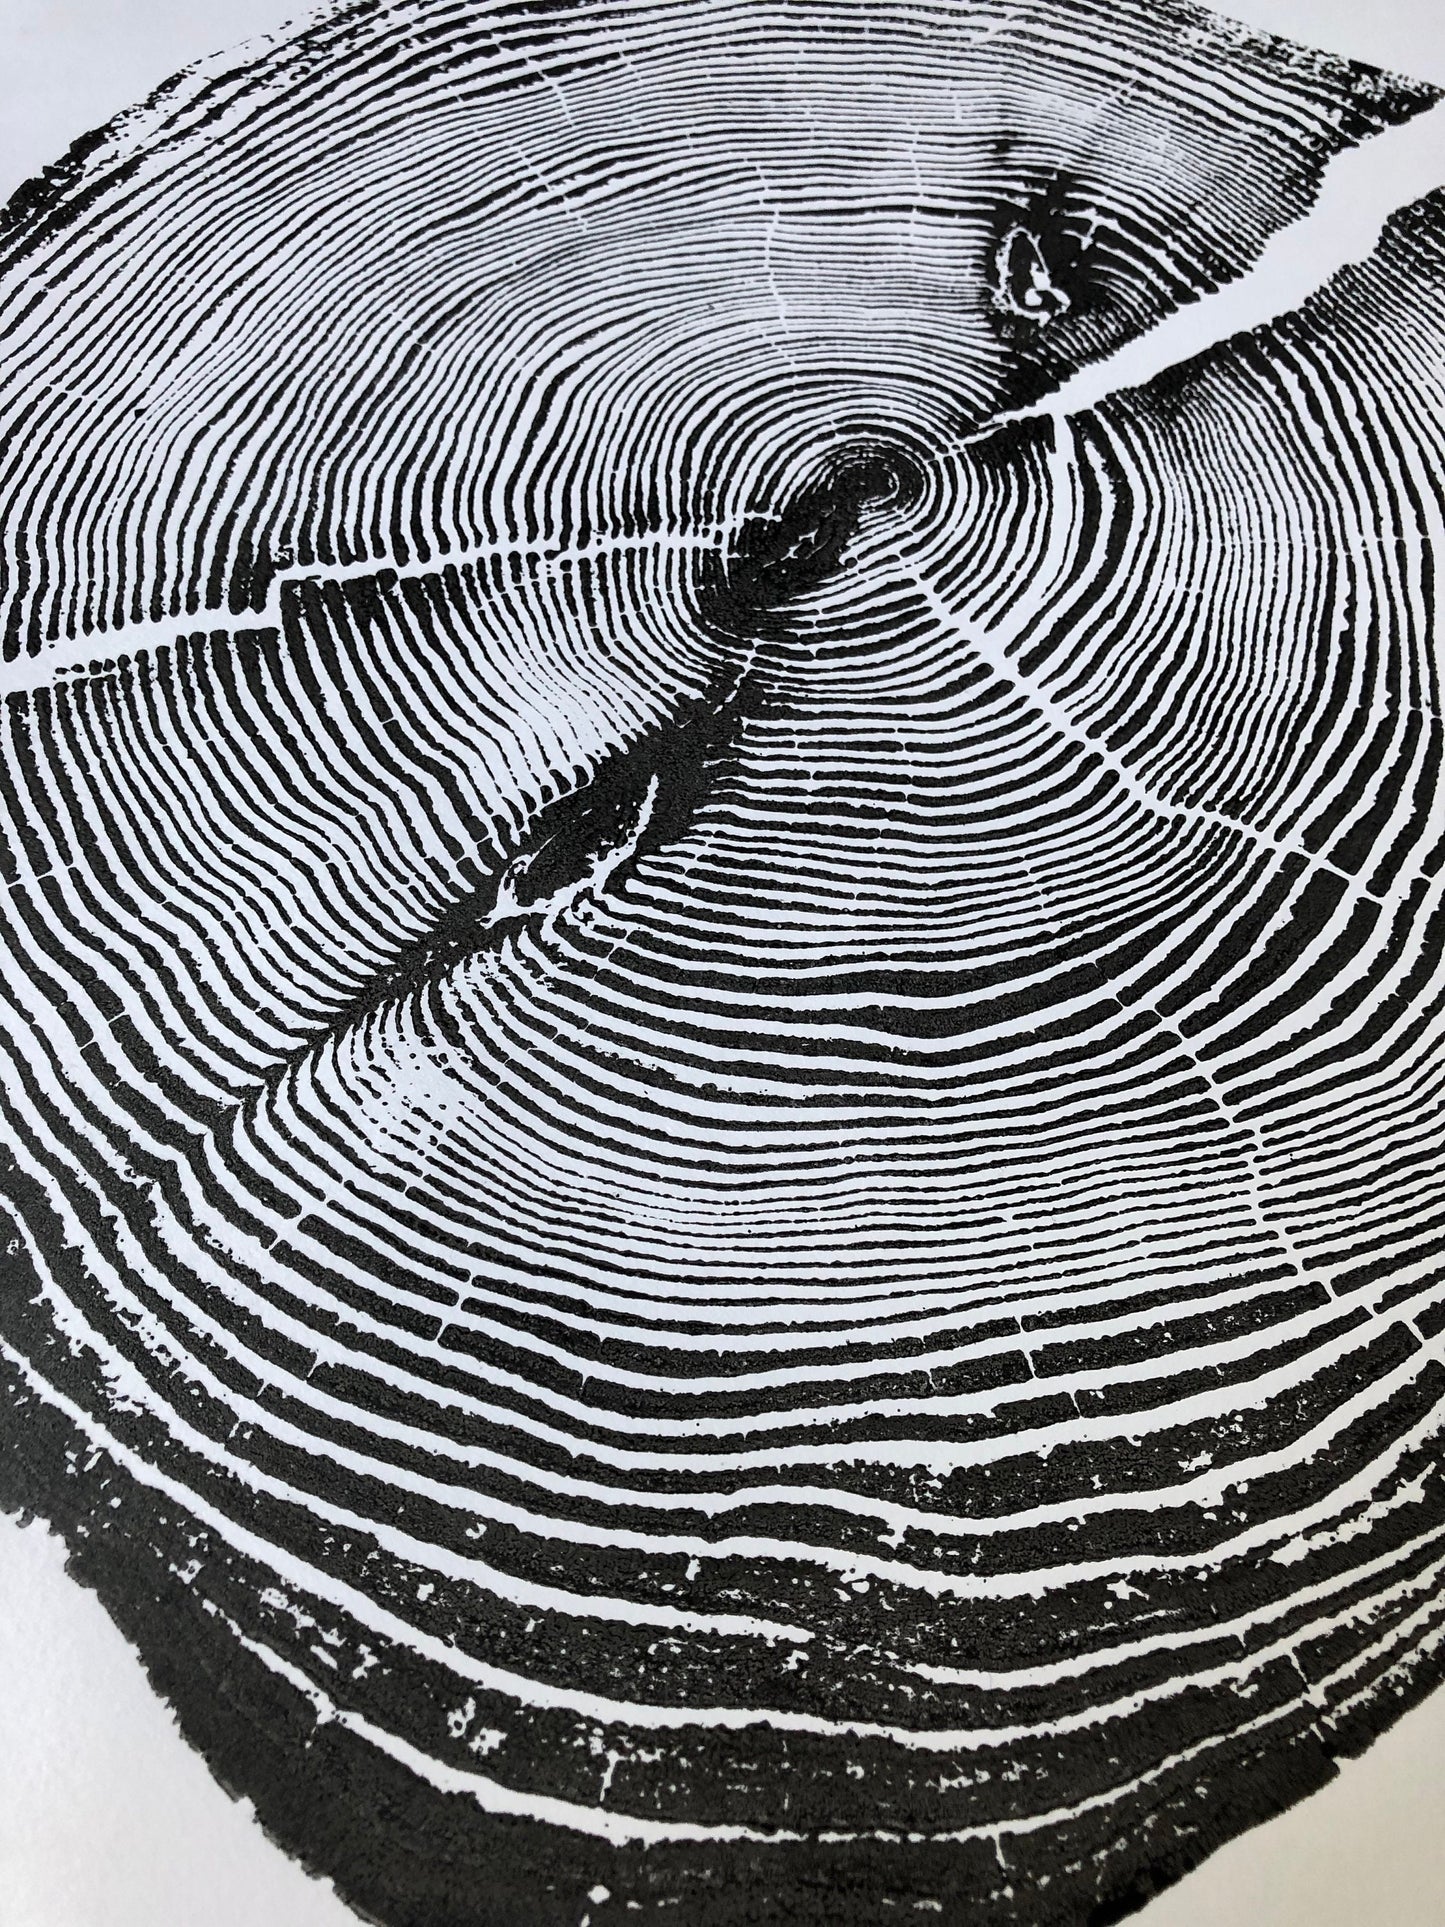 Lake Superior, Michigan Driftwood Pine - 18x24 print